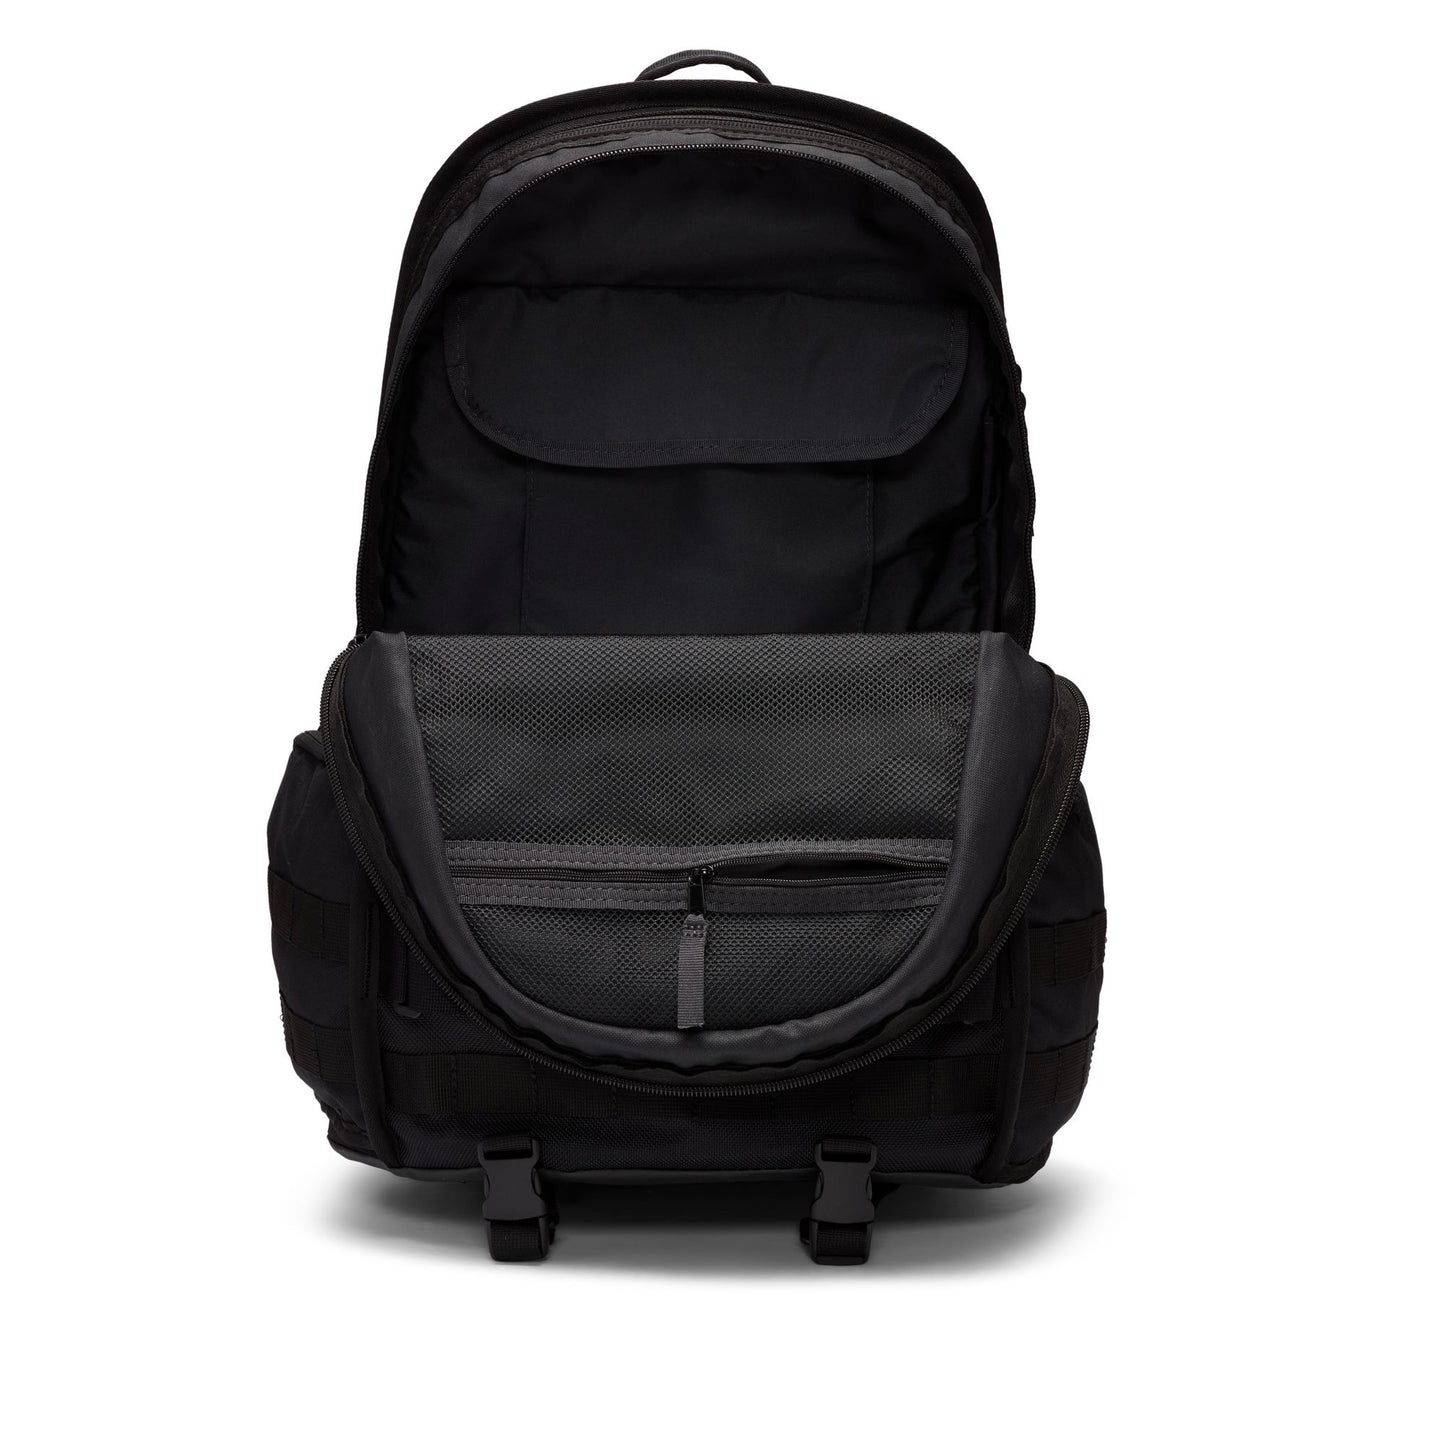 Nike SB RPM backpack black black white